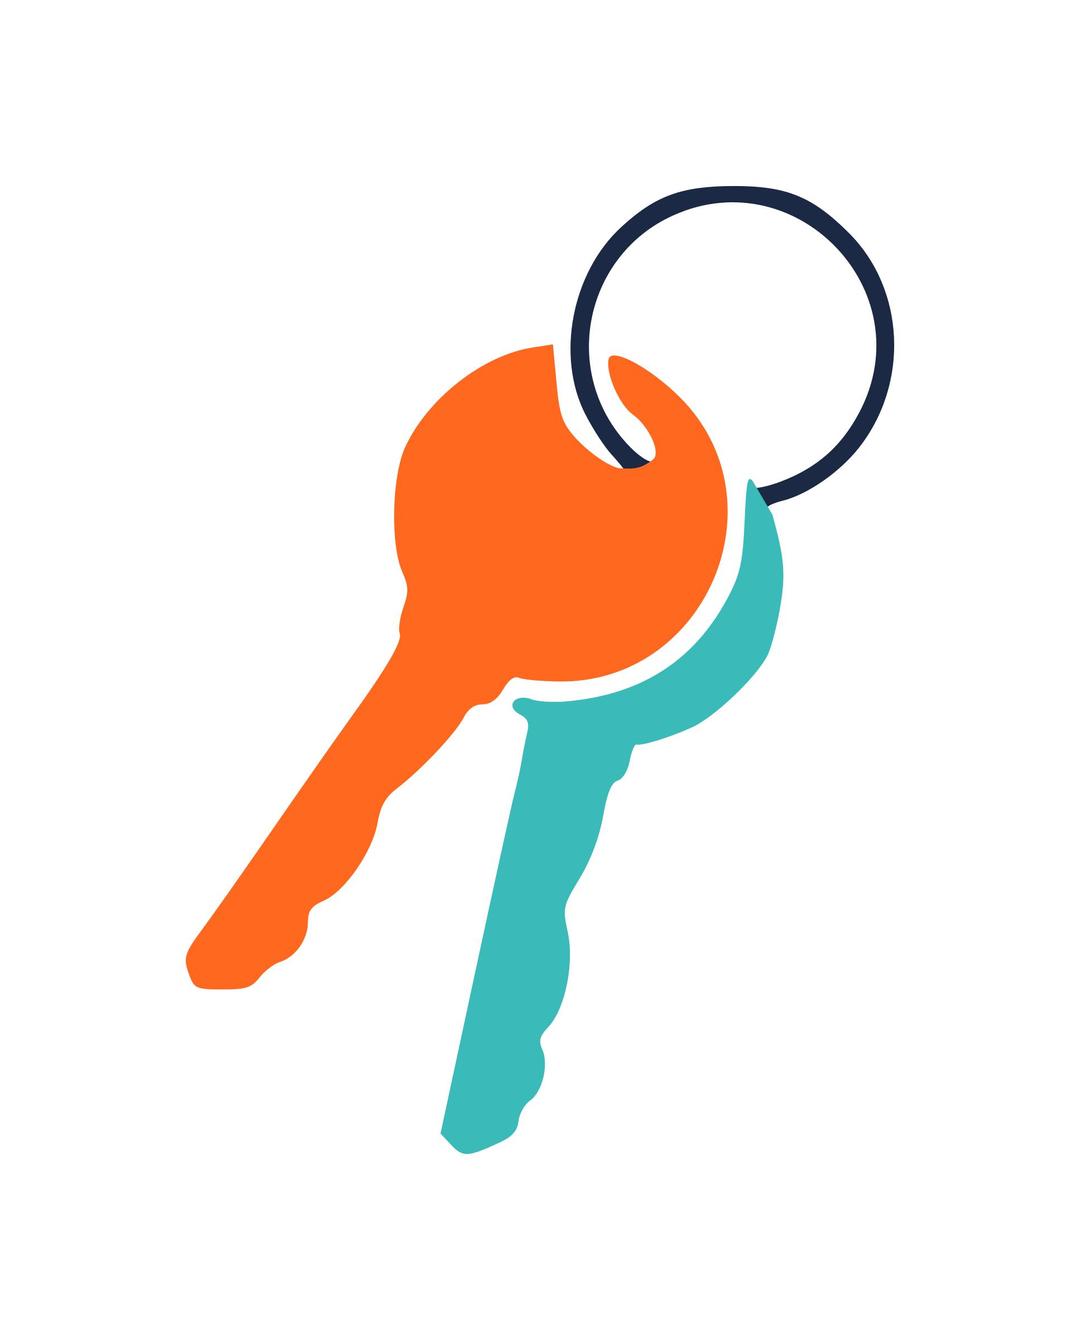 keys icon png transparent